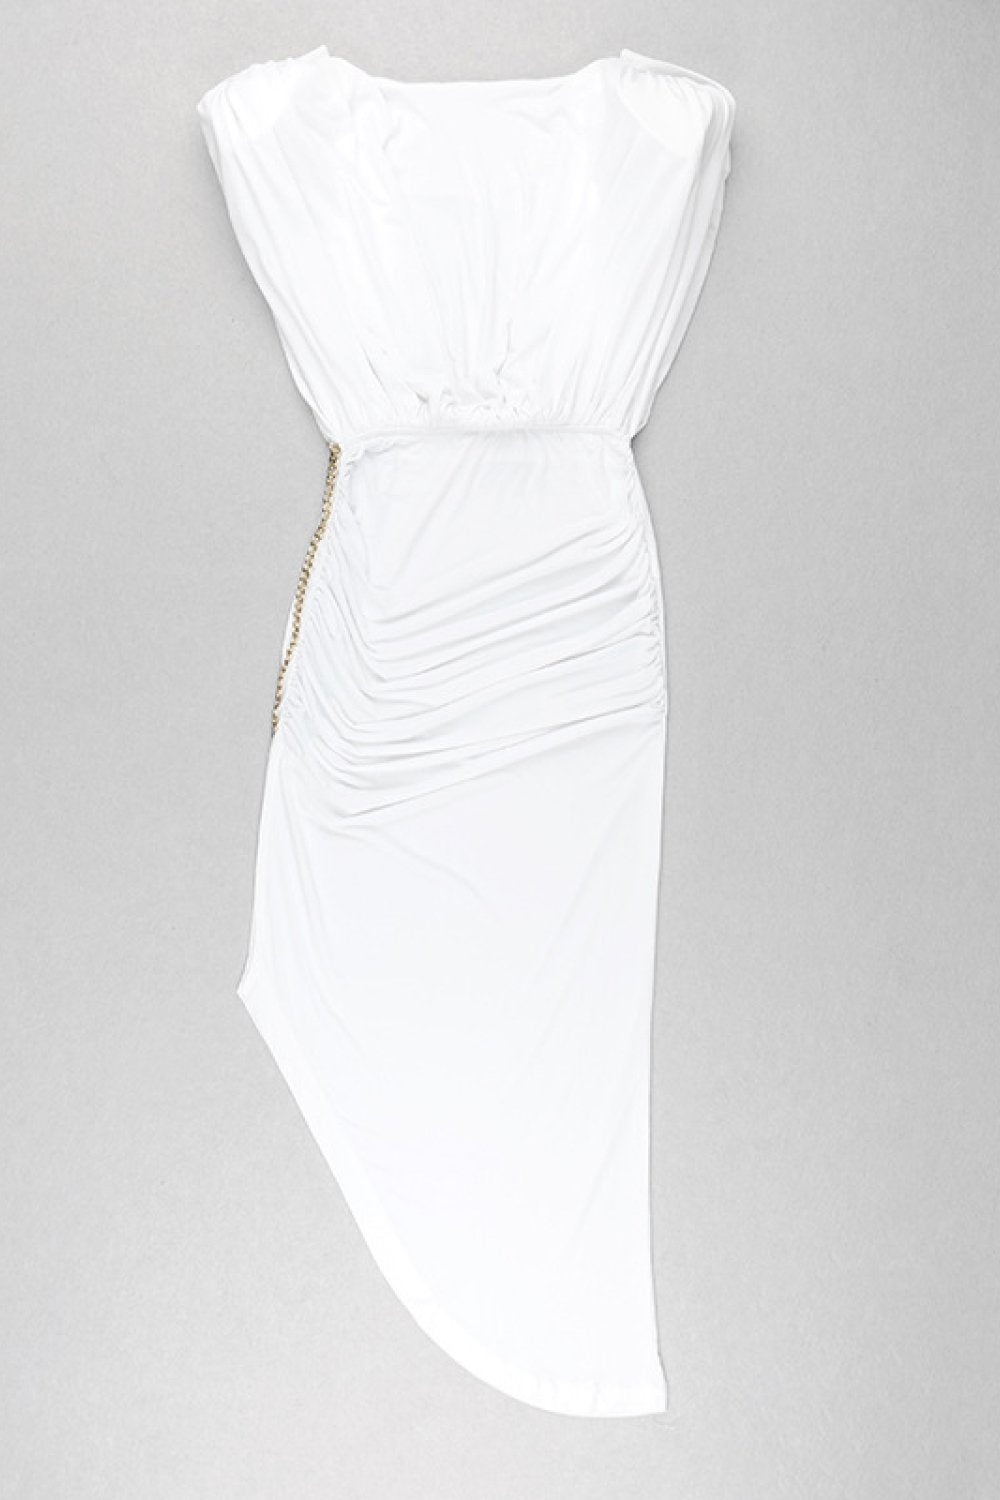 cap sleeve v back chain detail asymmetrical dress